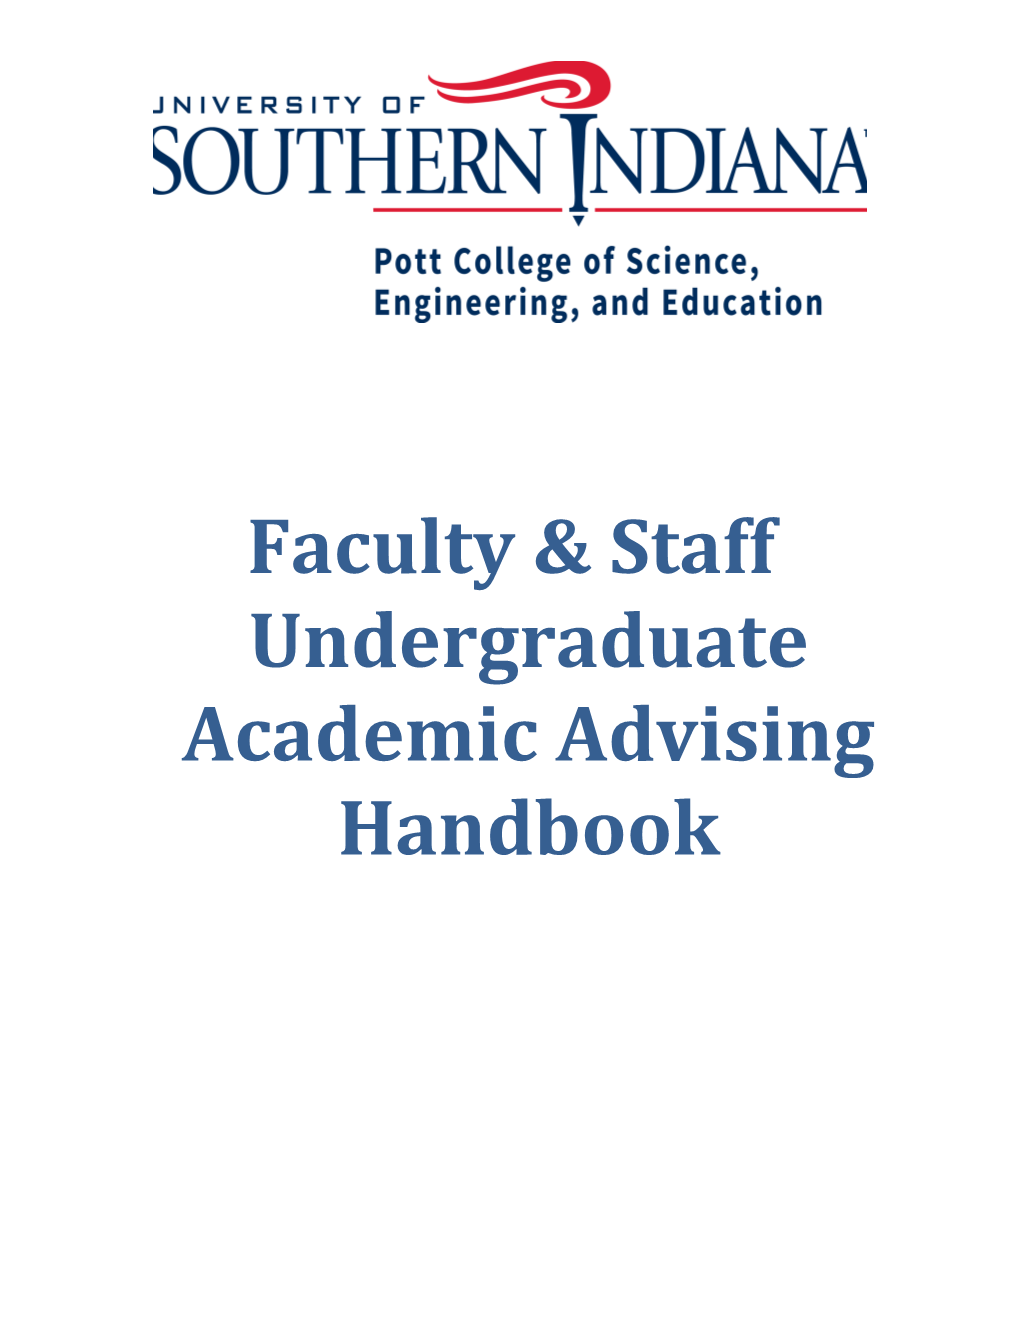 Faculty & Staff Undergraduate Academic Advising Handbook